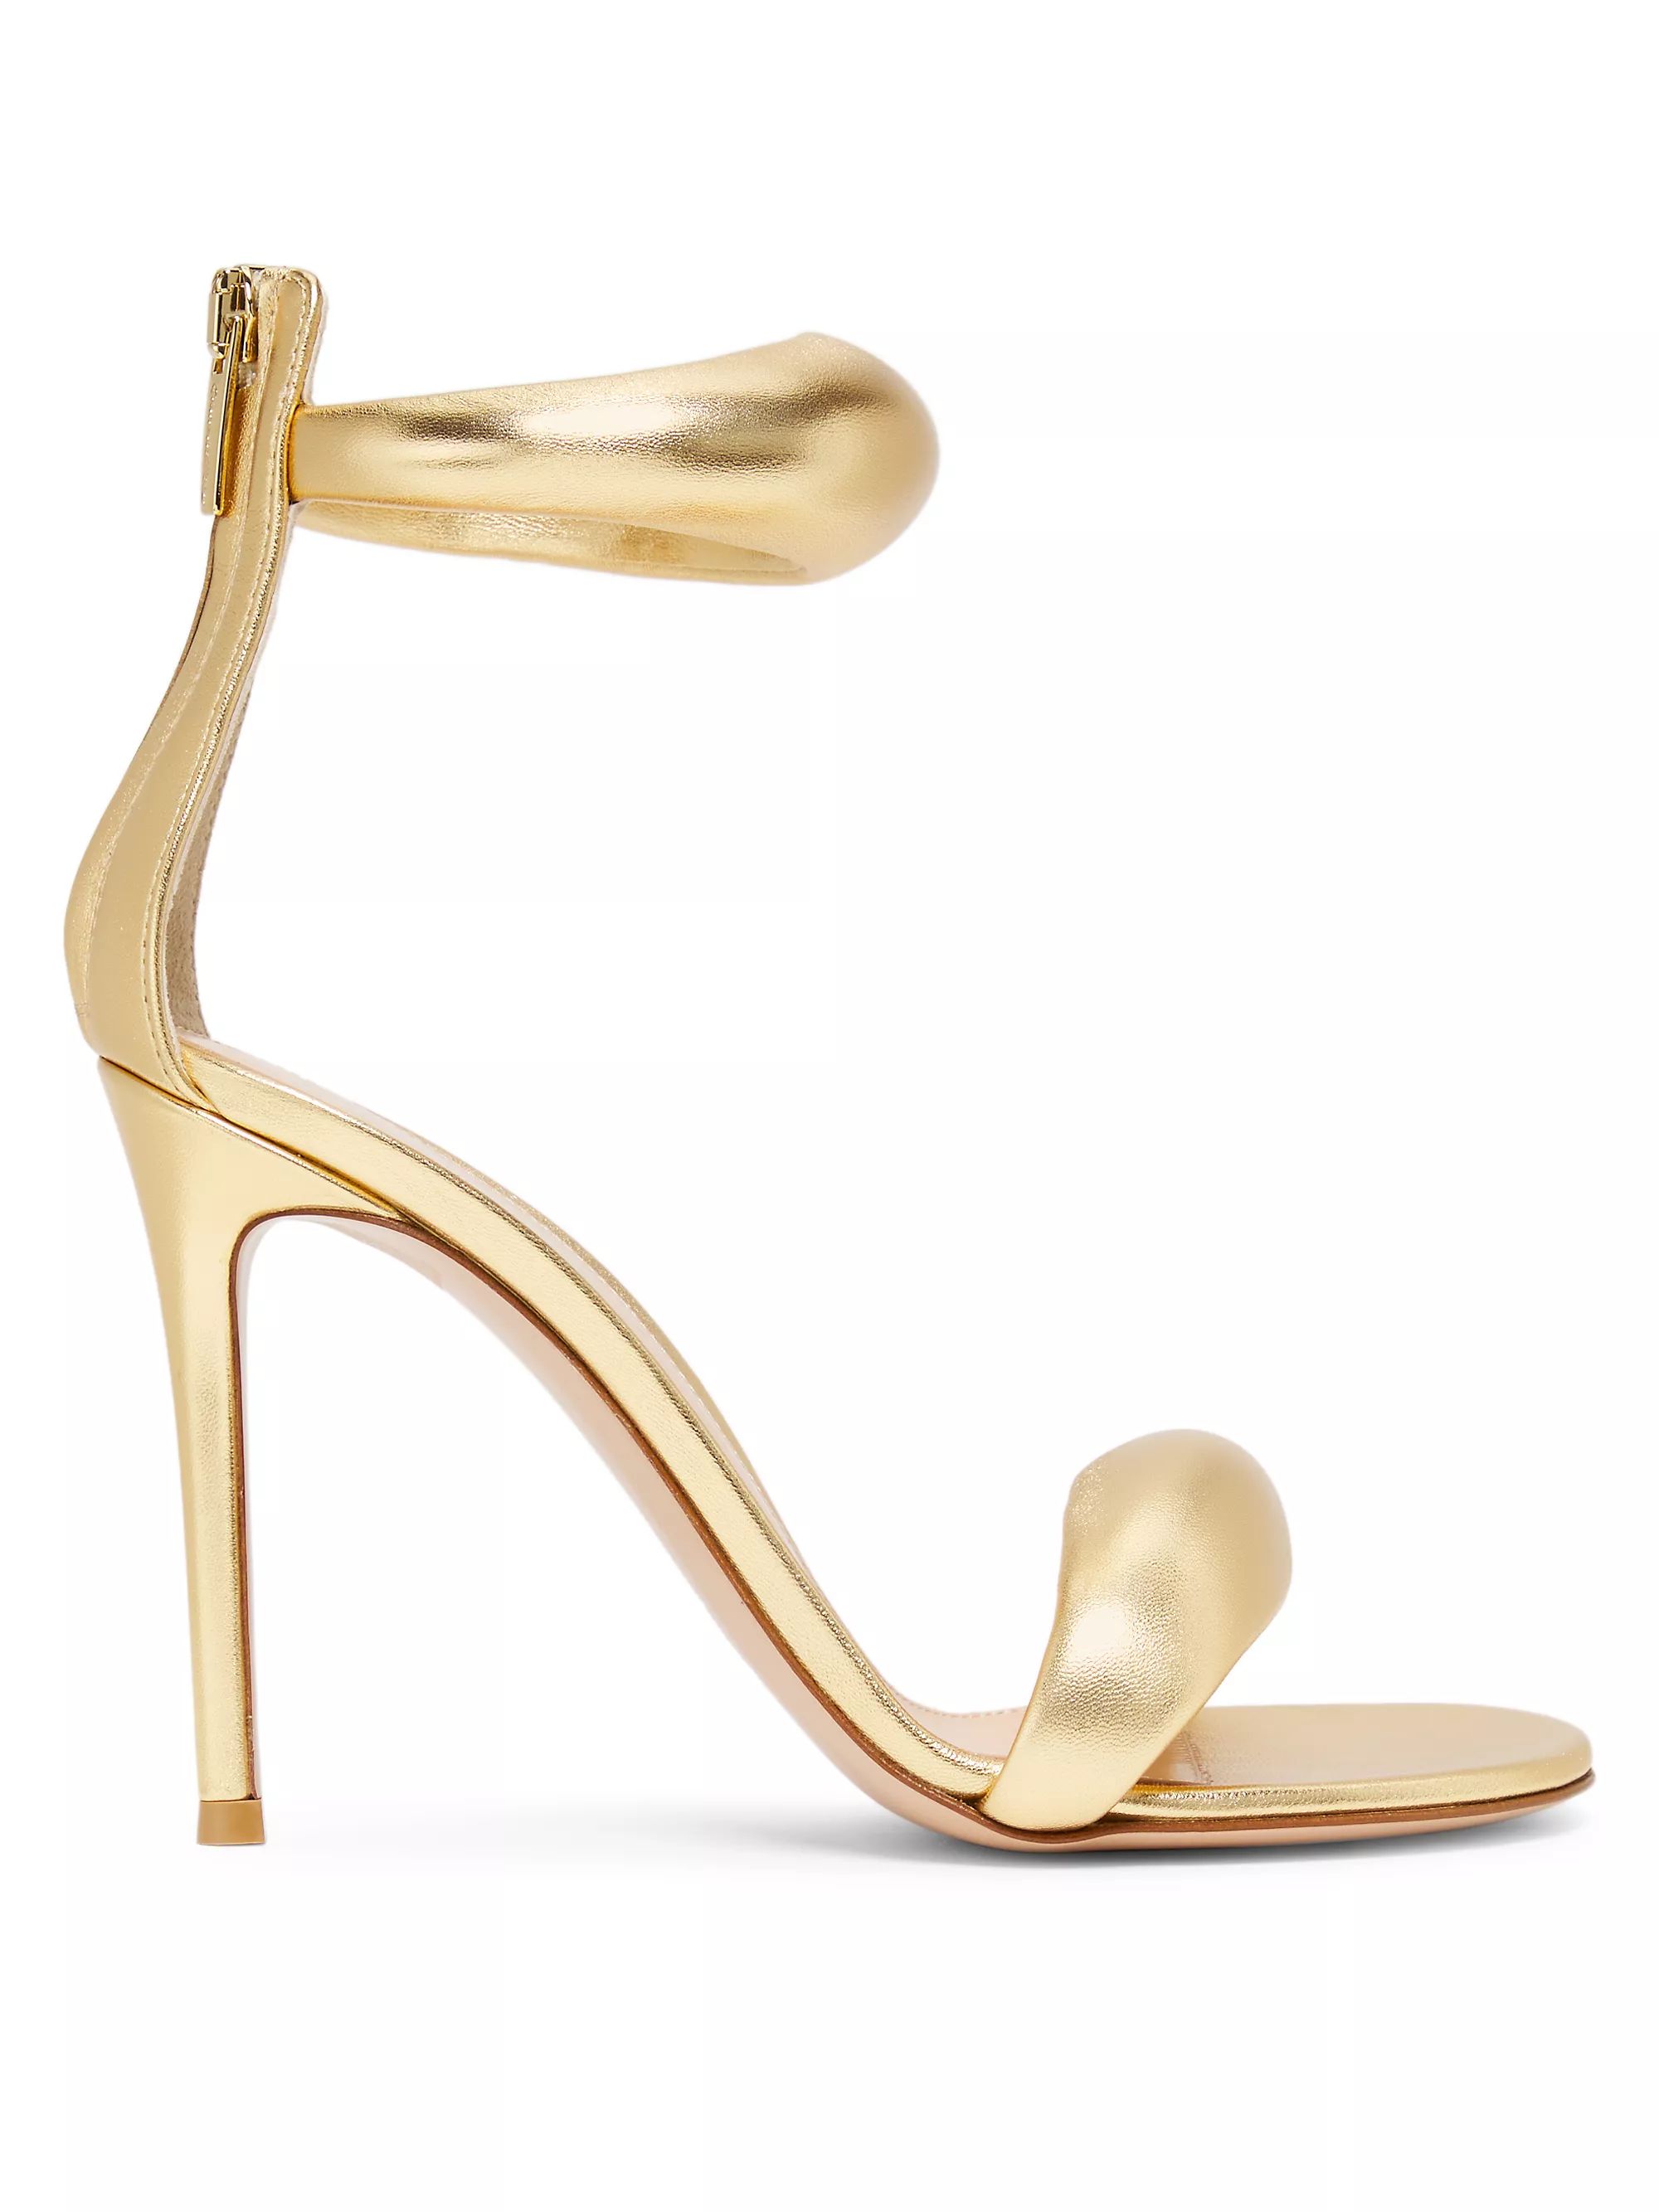 Shop Gianvito Rossi Bijoux Ankle-Strap Metallic Leather Stiletto Sandals | Saks Fifth Avenue | Saks Fifth Avenue